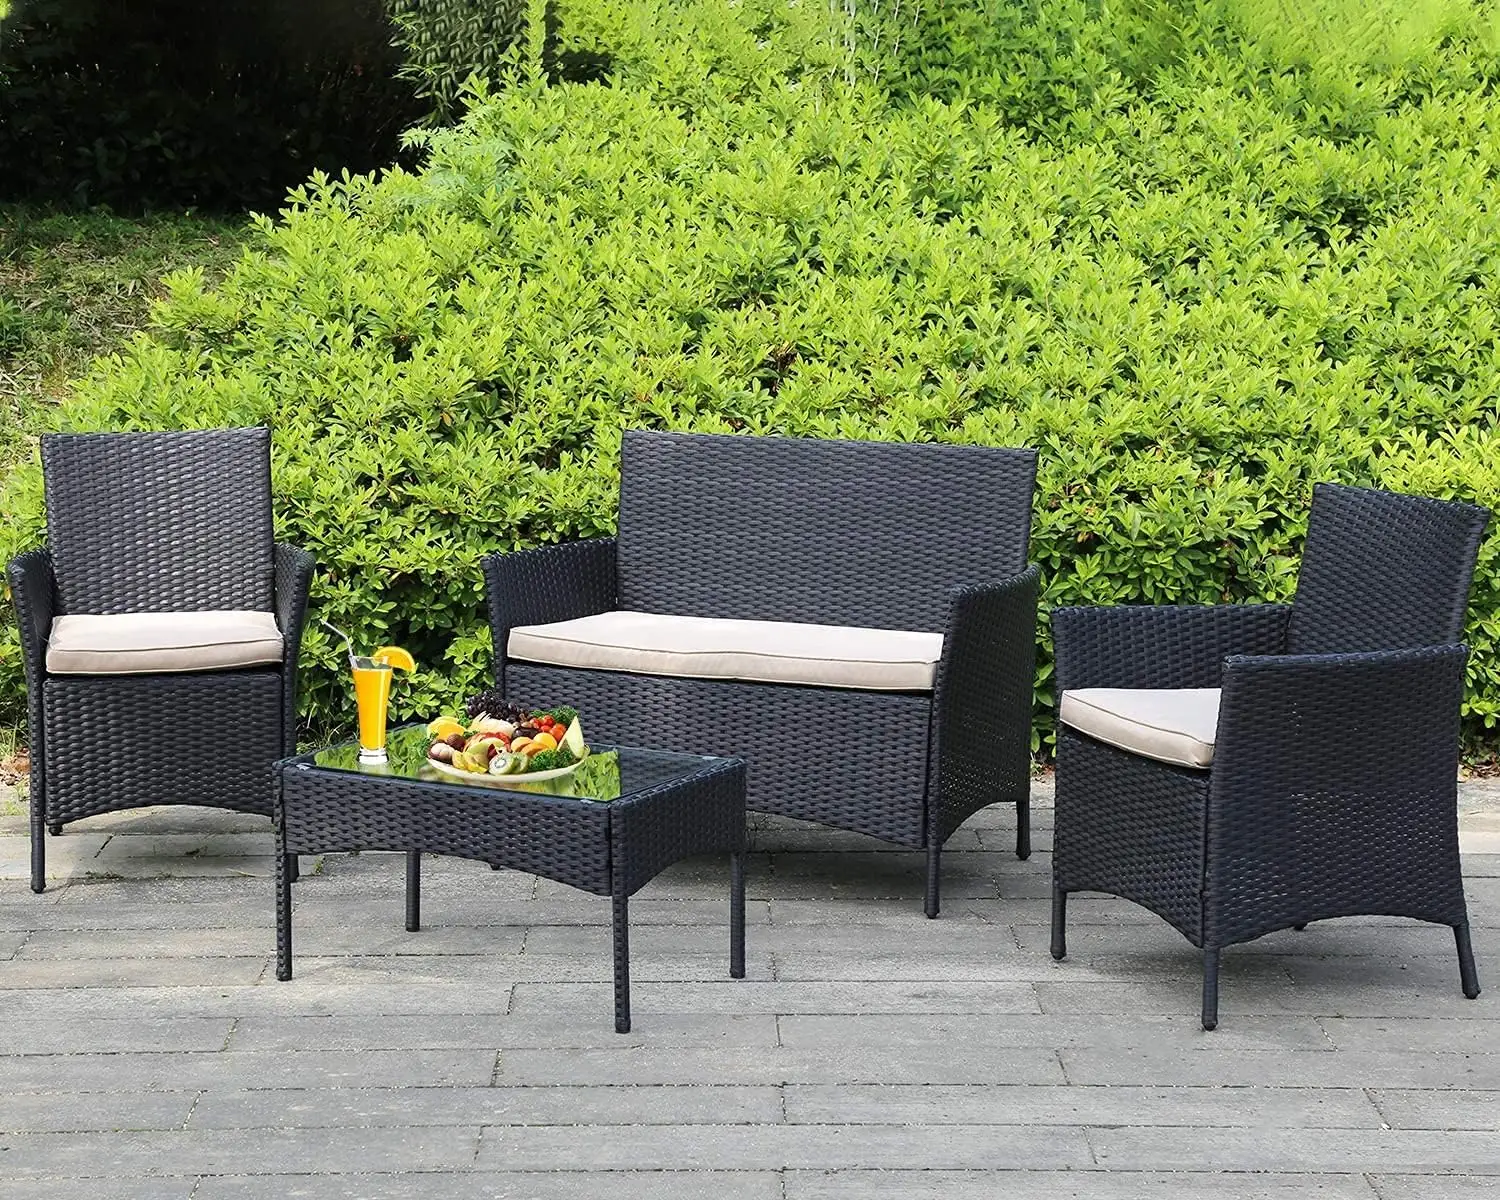 Hot sale Outdoor Patio Furniture Sets 4 Pieces Patio Set Rattan Chair Wicker Sofa Conversation Set